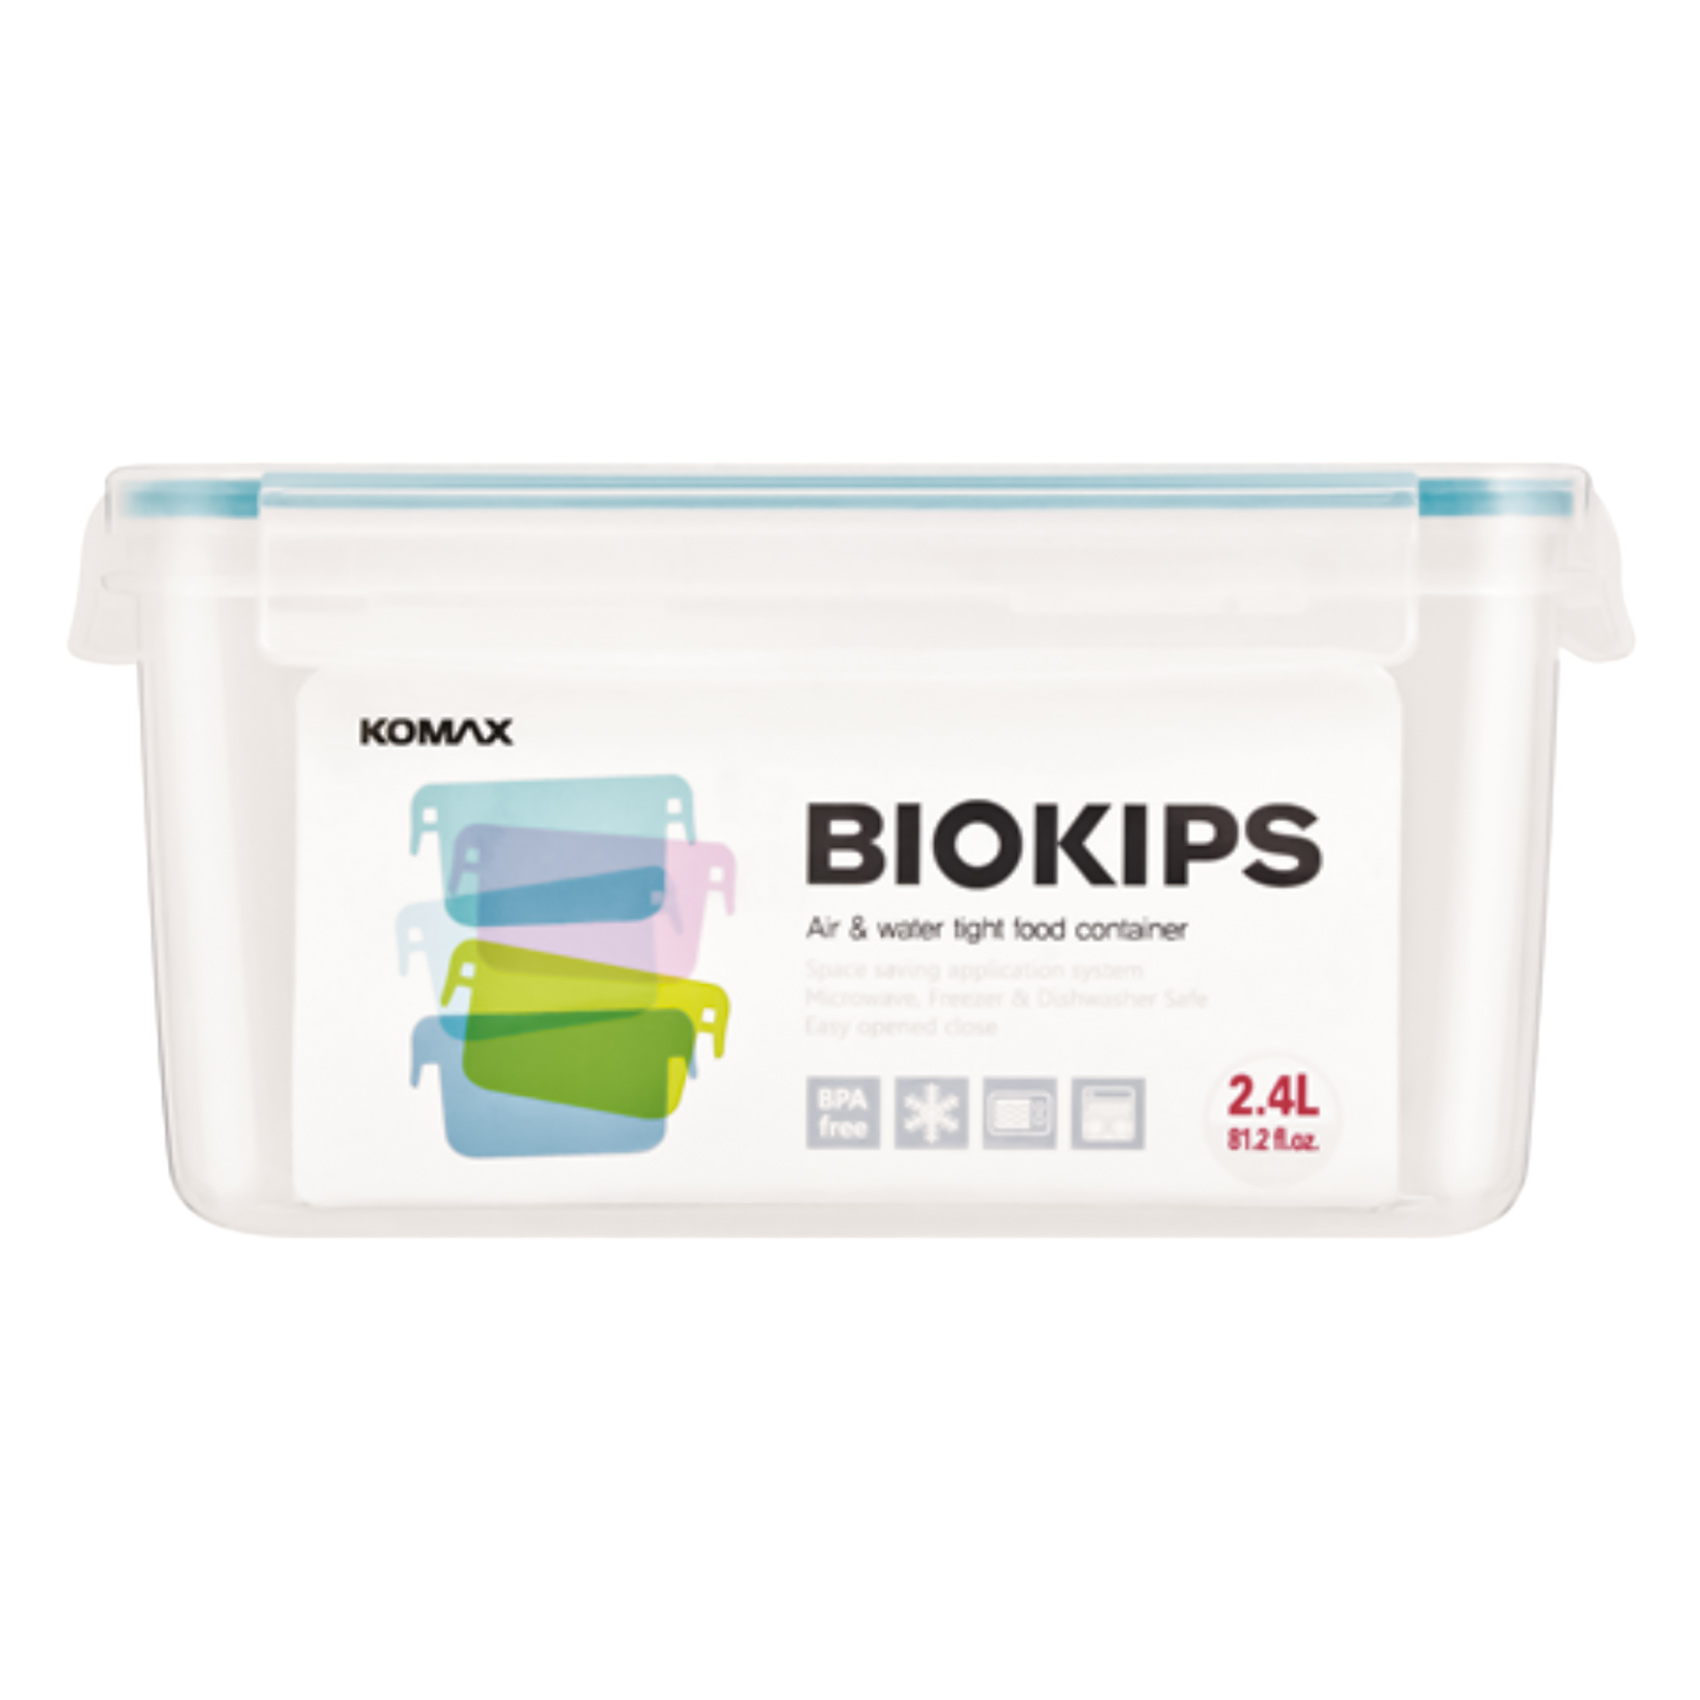 Komax Food Container Biokips Air And Watertight 2.4 Liter